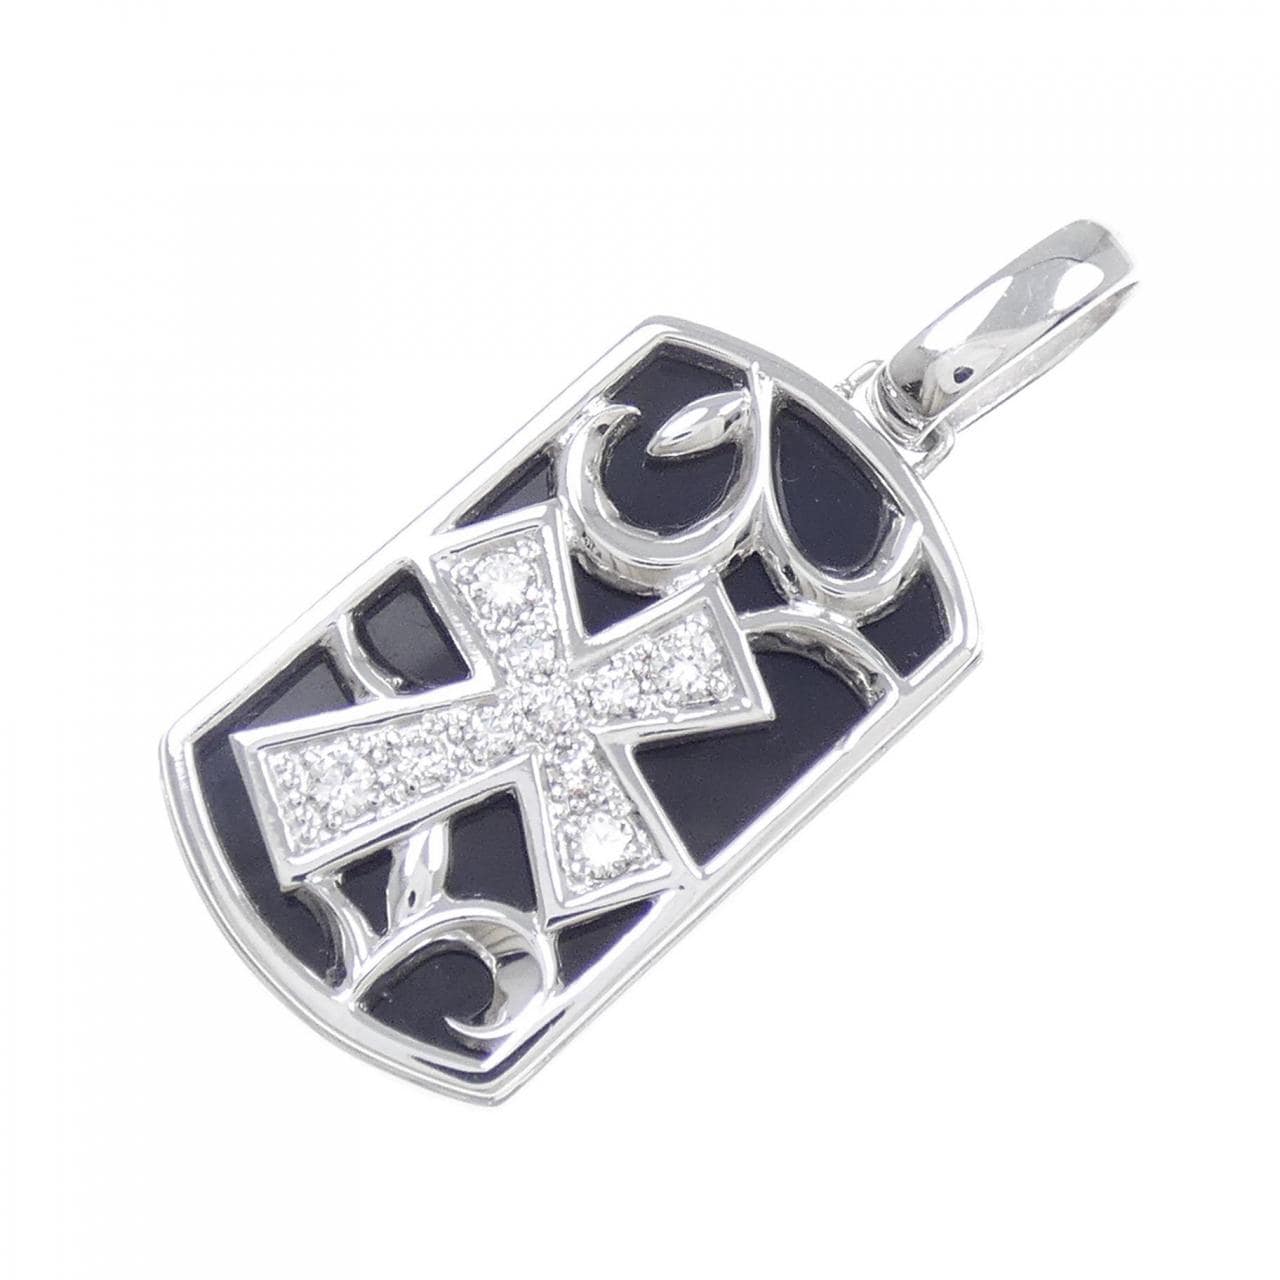 K18WG cross onyx pendant